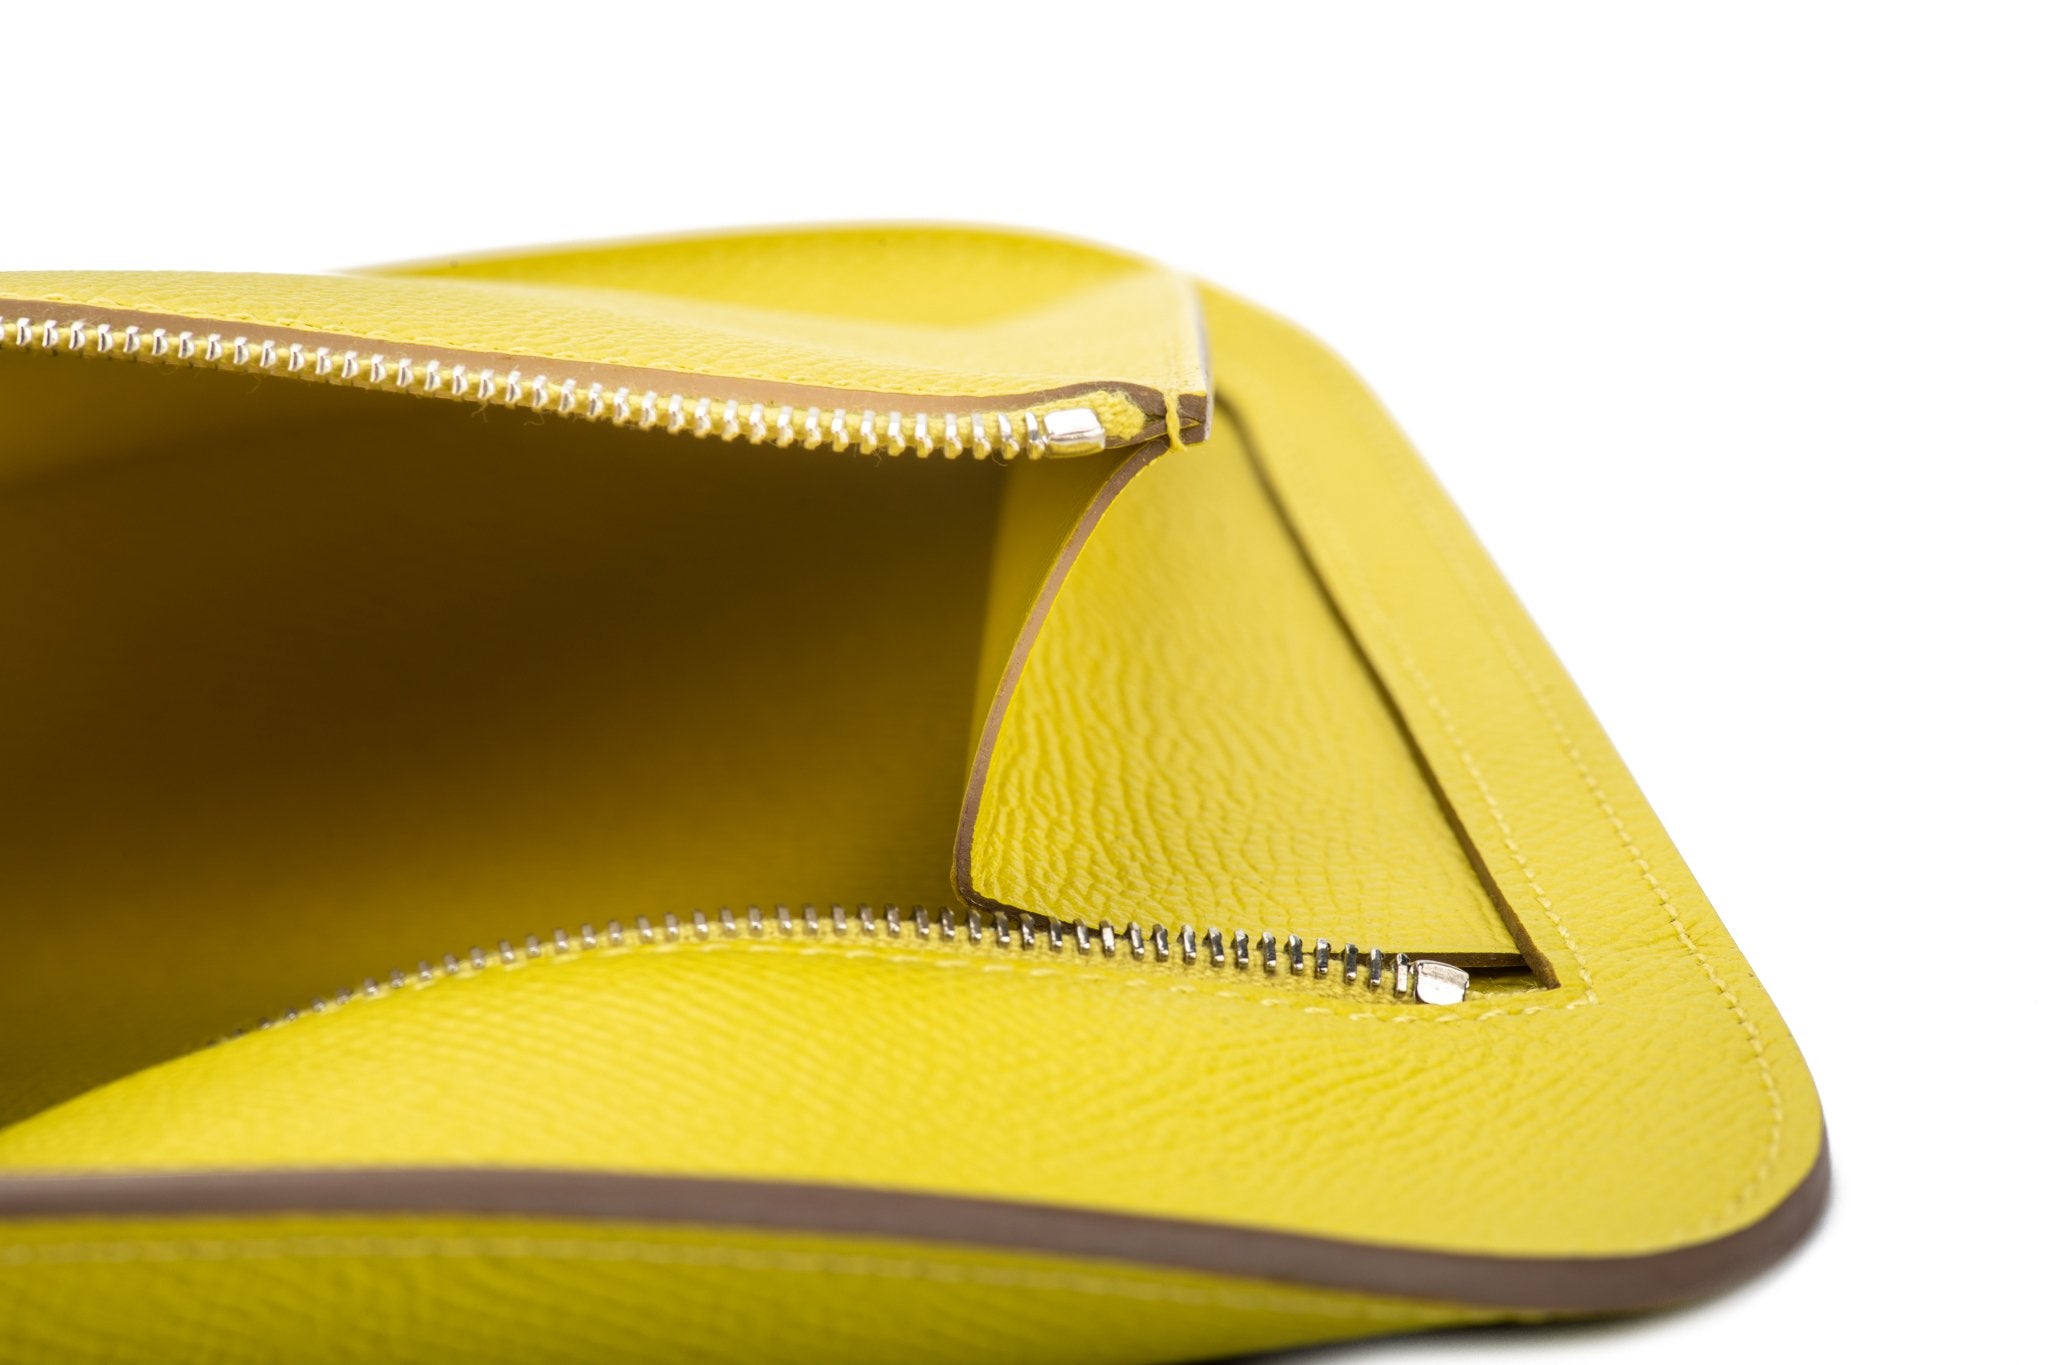 Hermès 2017 Epsom Calvi Pouch - Yellow Clutches, Handbags